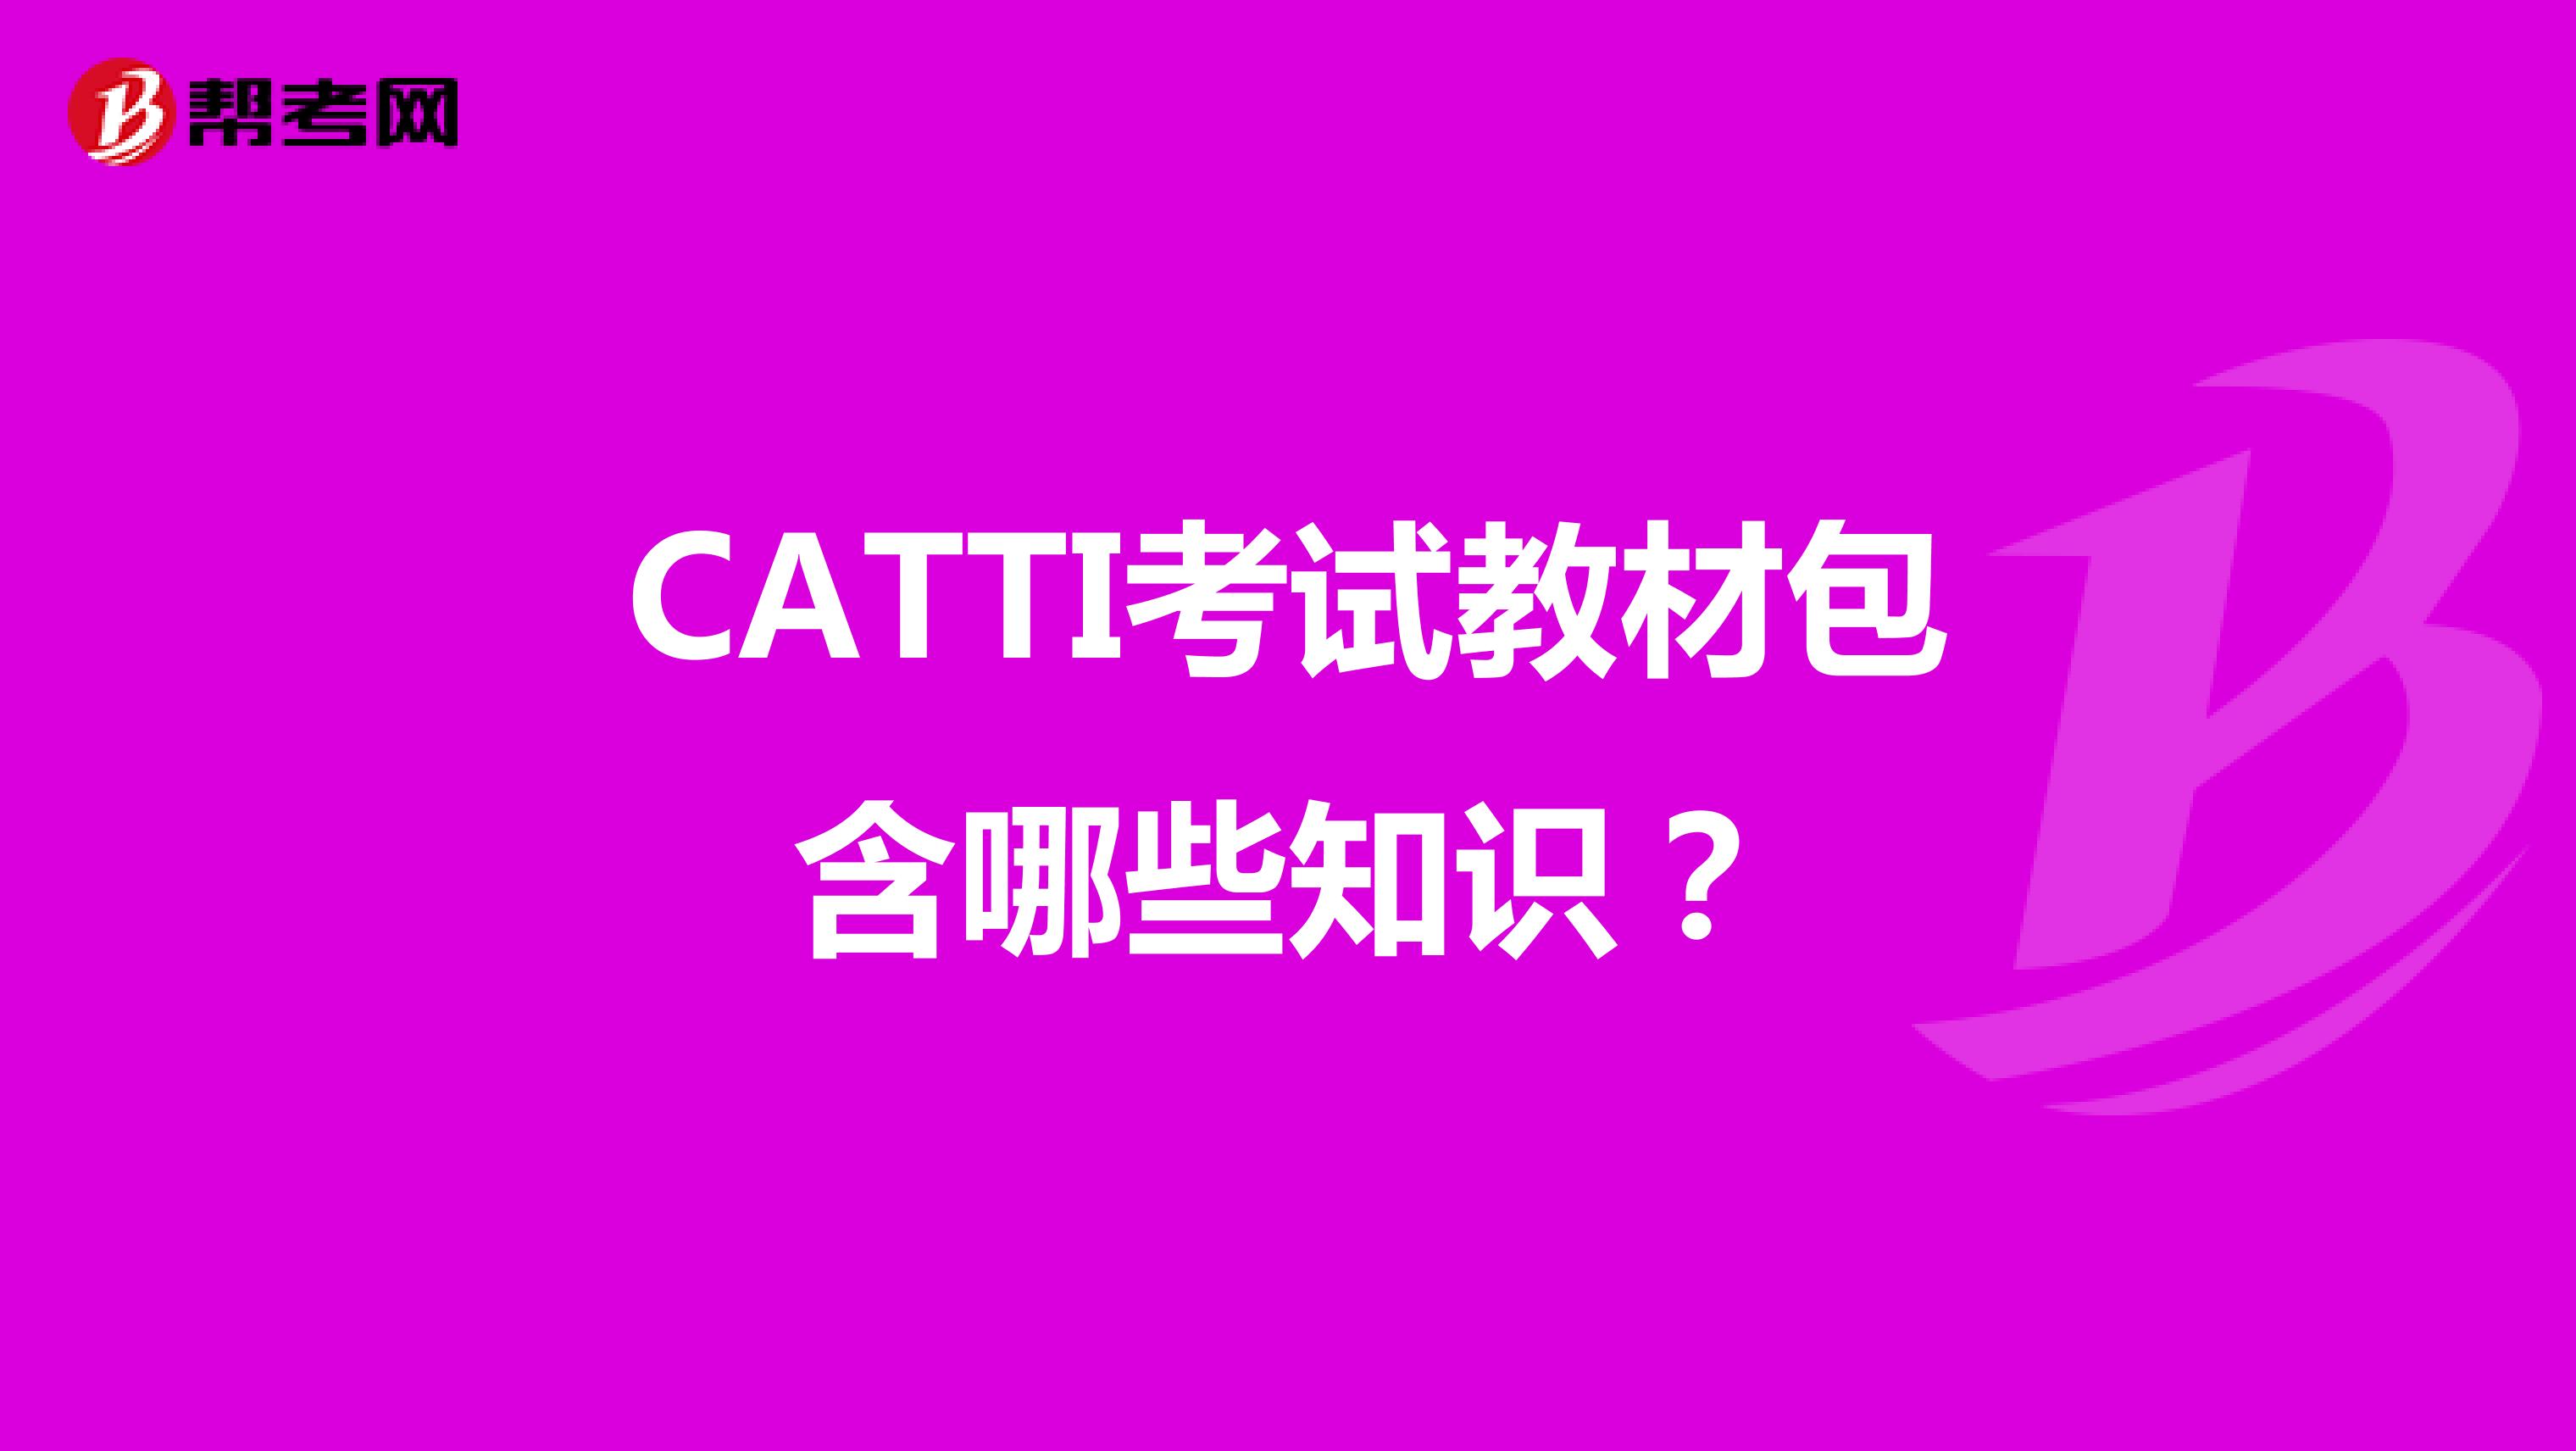 CATTI考试教材包含哪些知识？